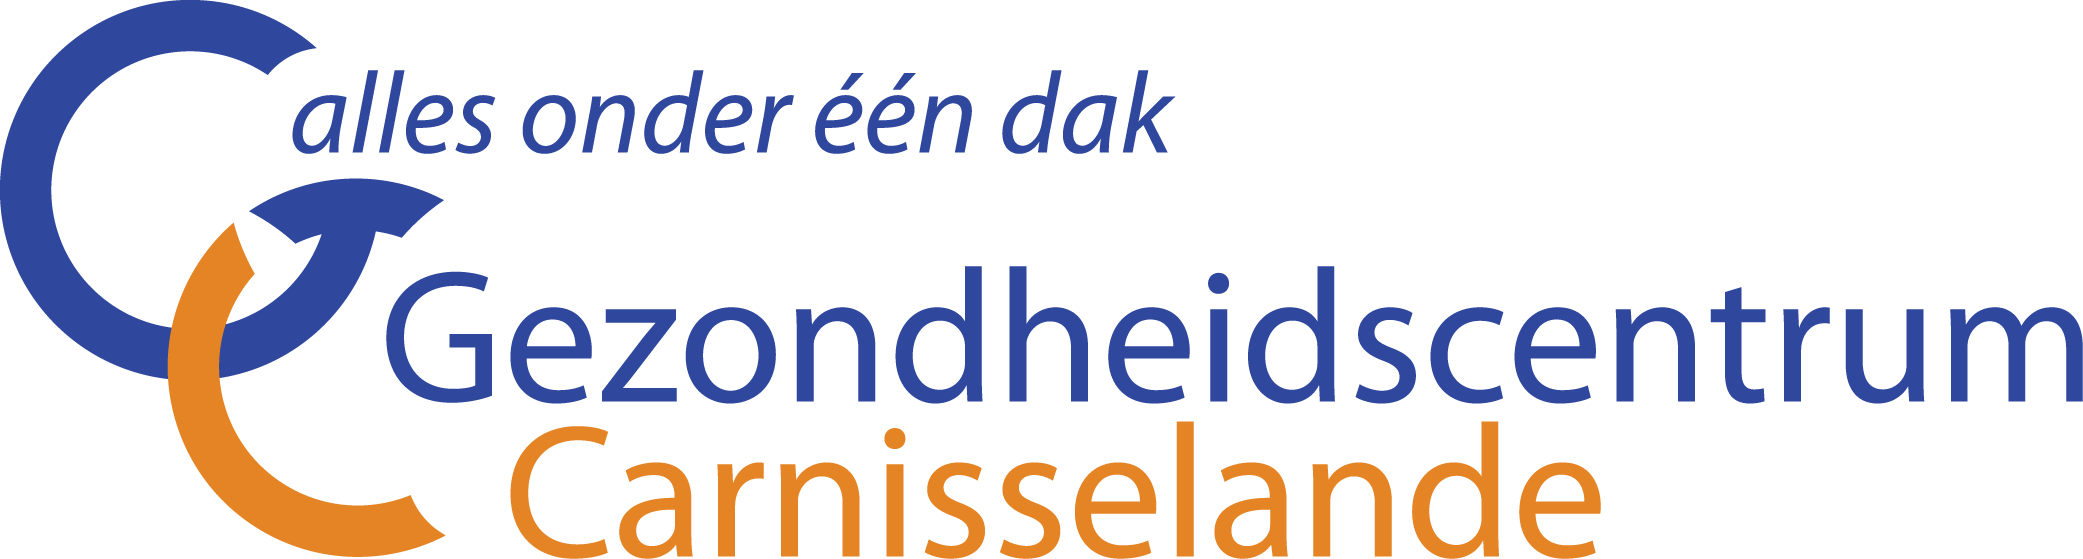 Gezondheidscentrum Carnisselande Logo